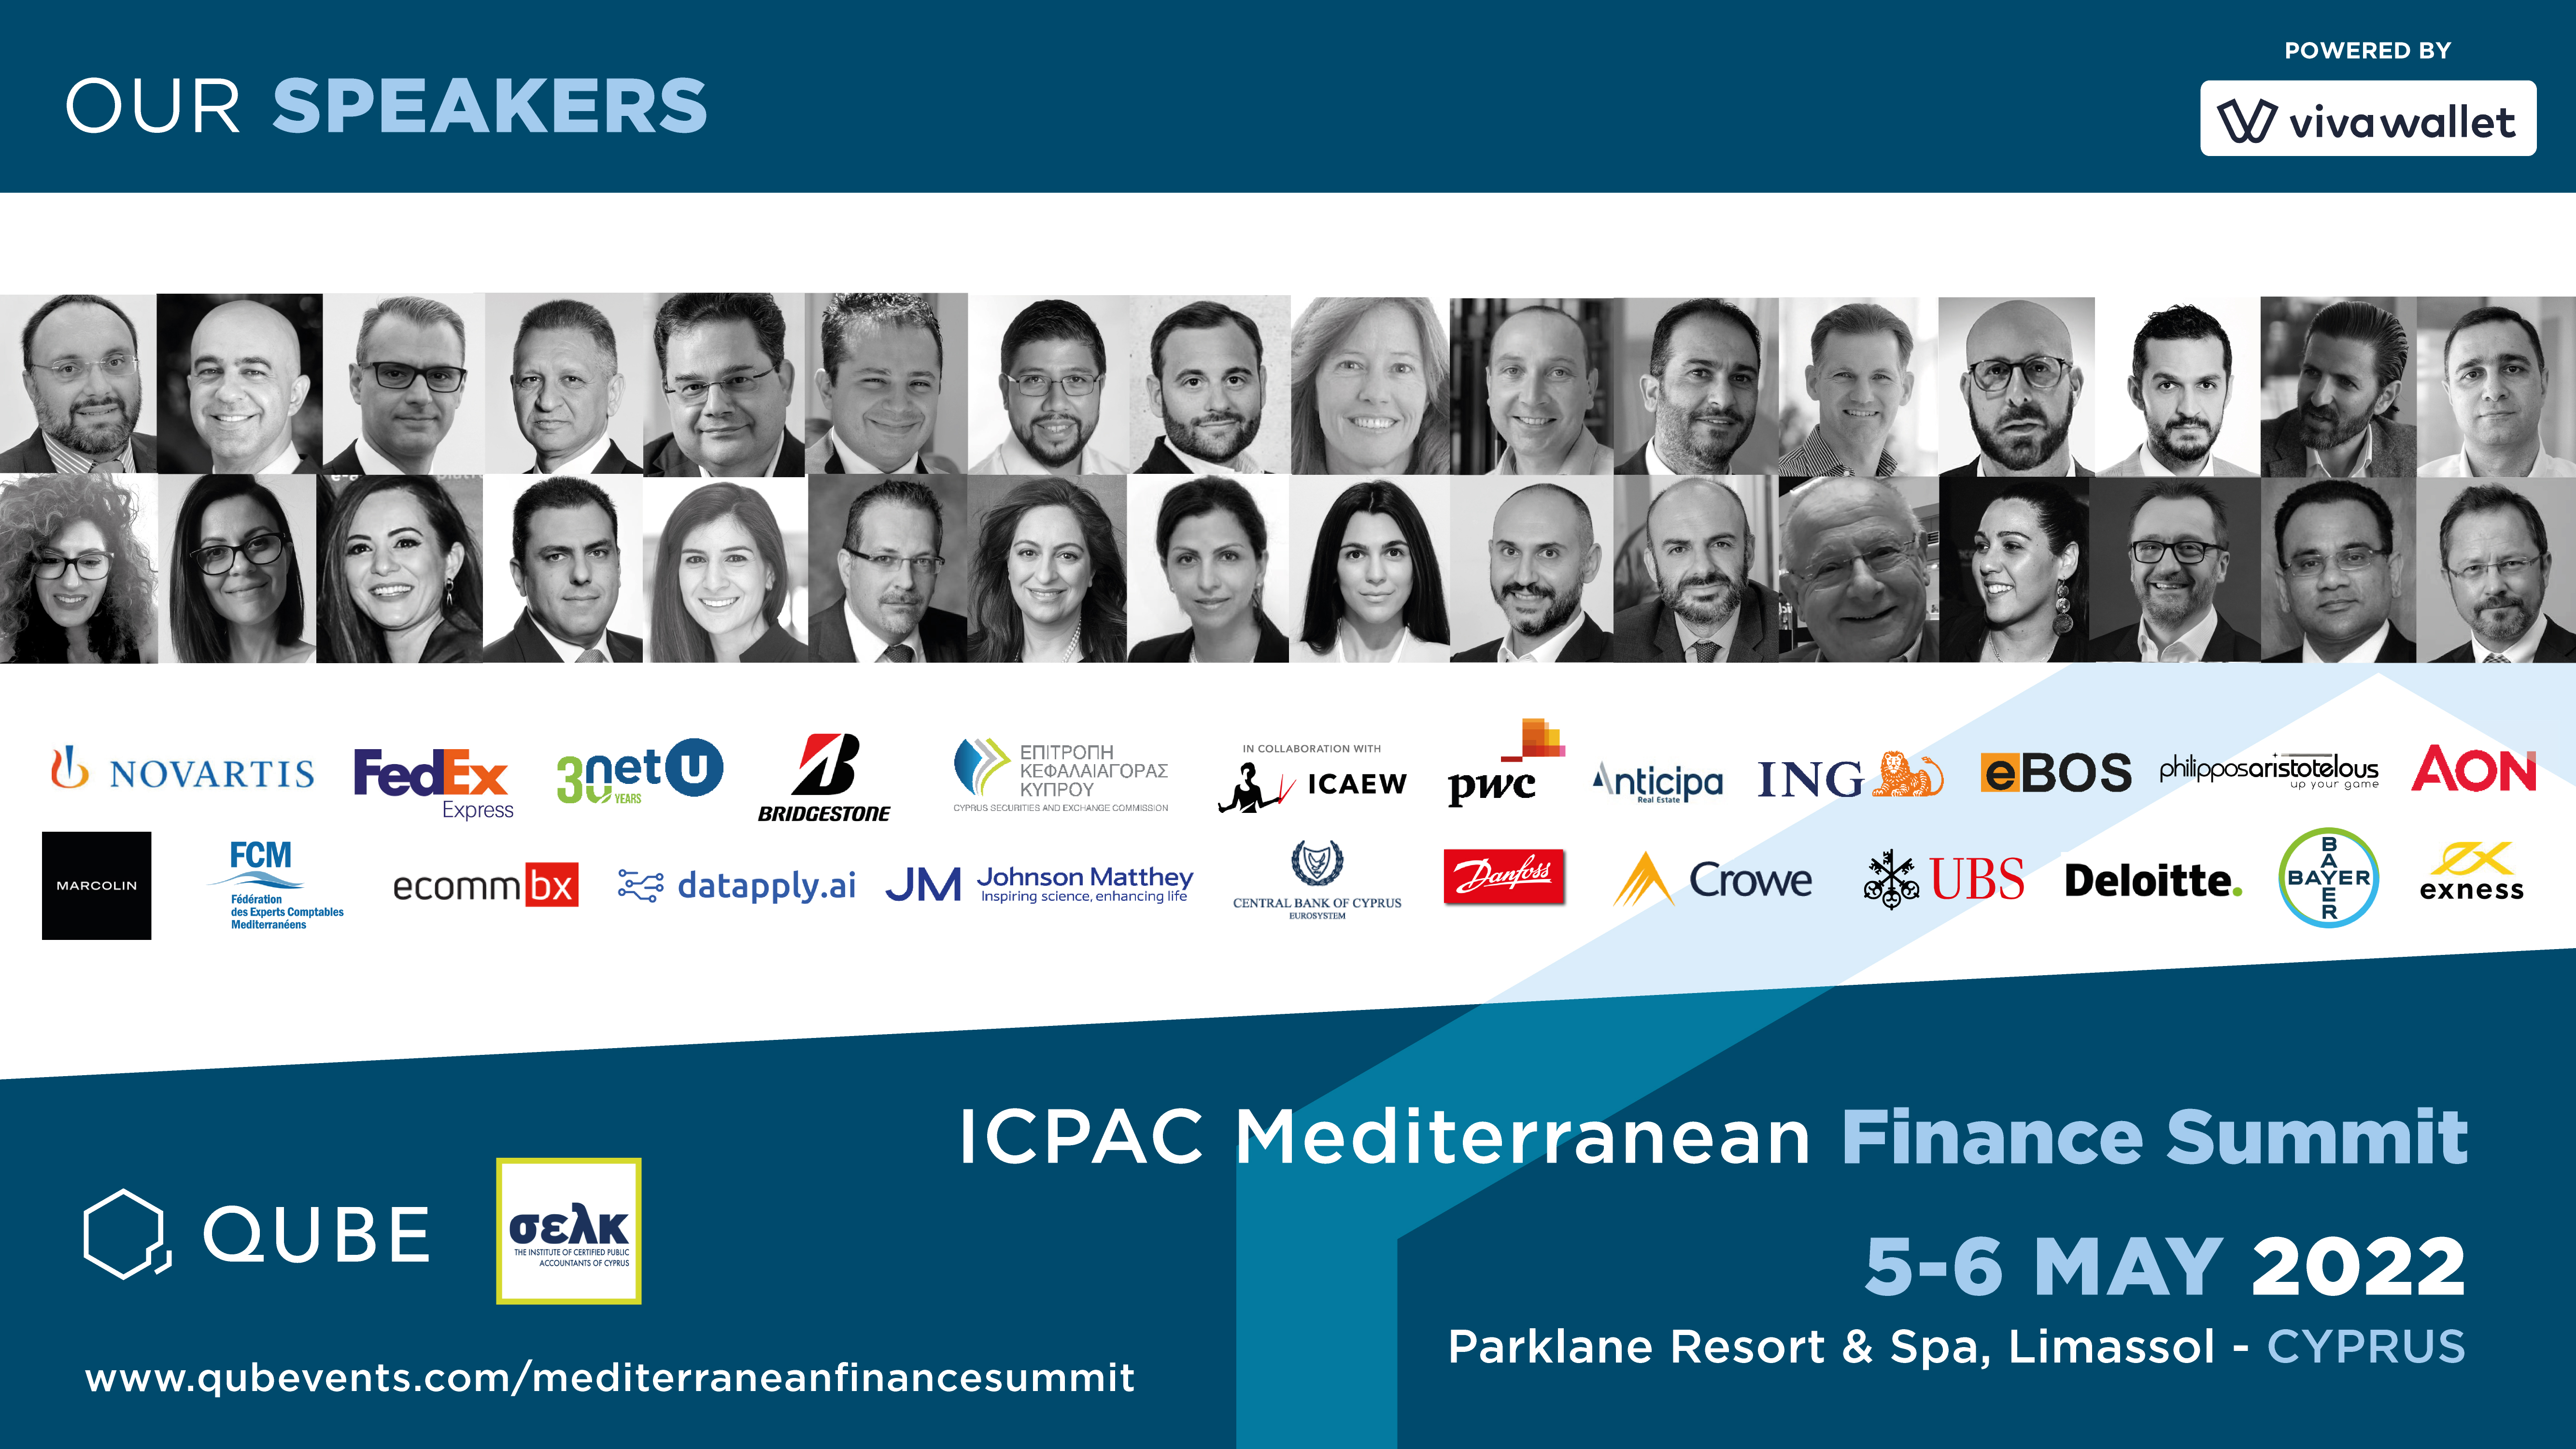 The ICPAC Mediterranean Finance Summit Gathers International Finance Leaders in Cyprus